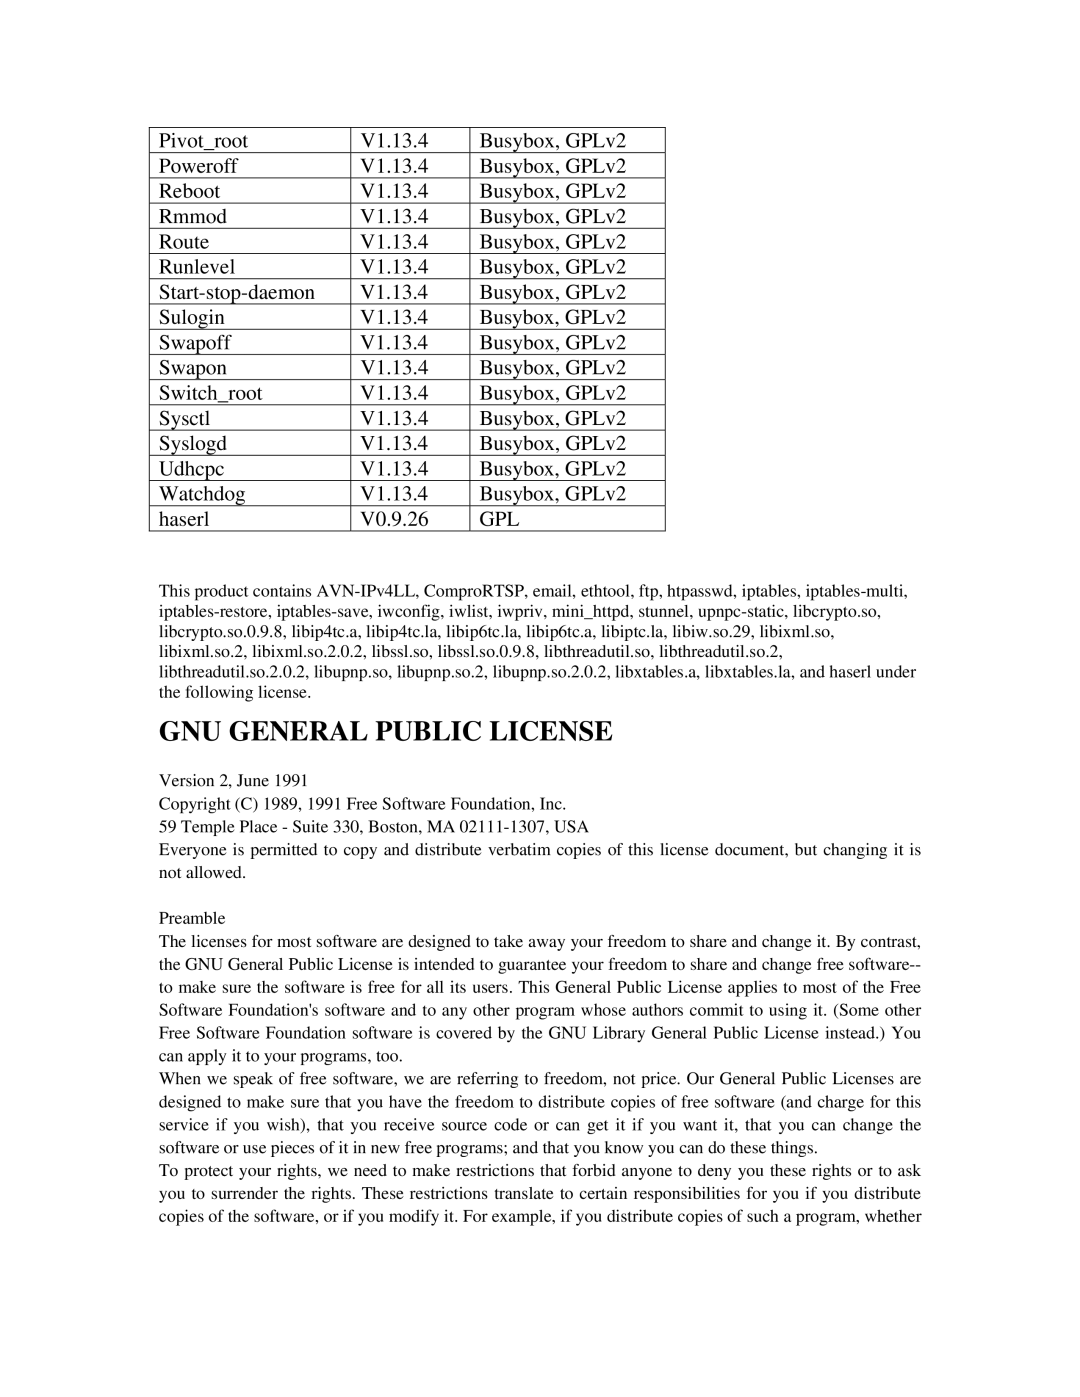 ZyXEL Communications network camera manual GNU General Public License 